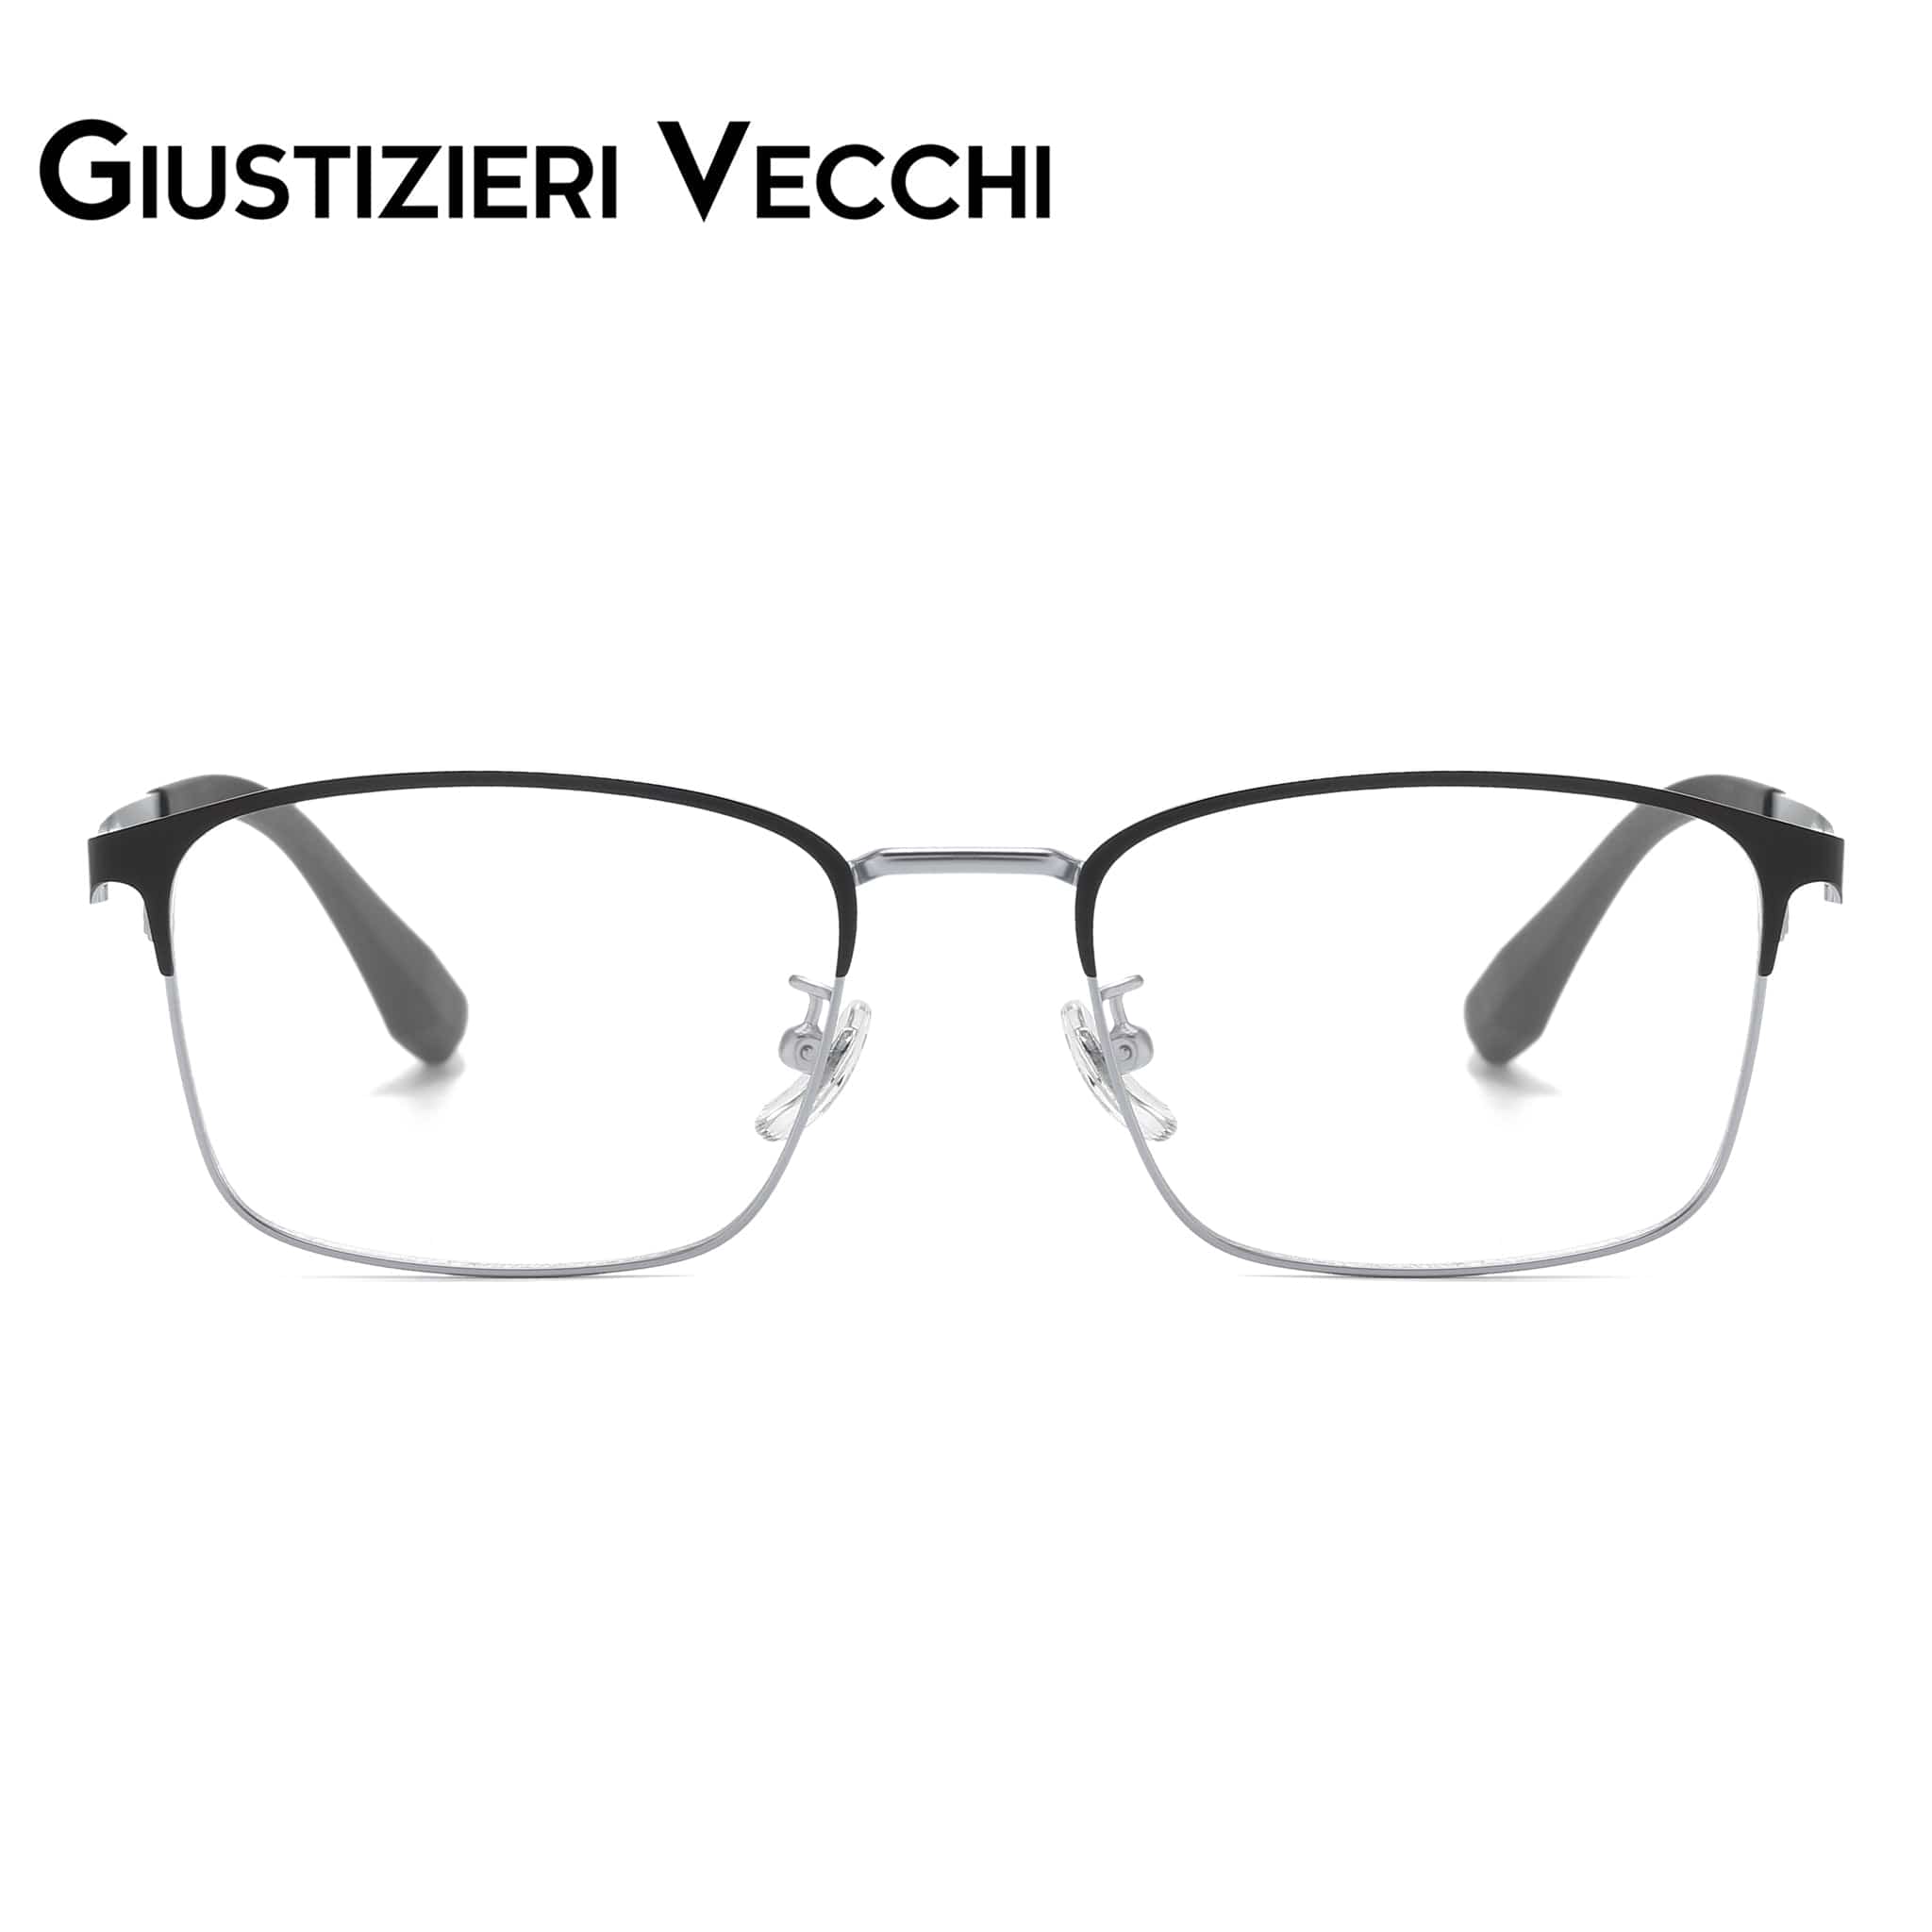 GIUSTIZIERI VECCHI Eyeglasses Medium / Black with Silver Firestorm Duo